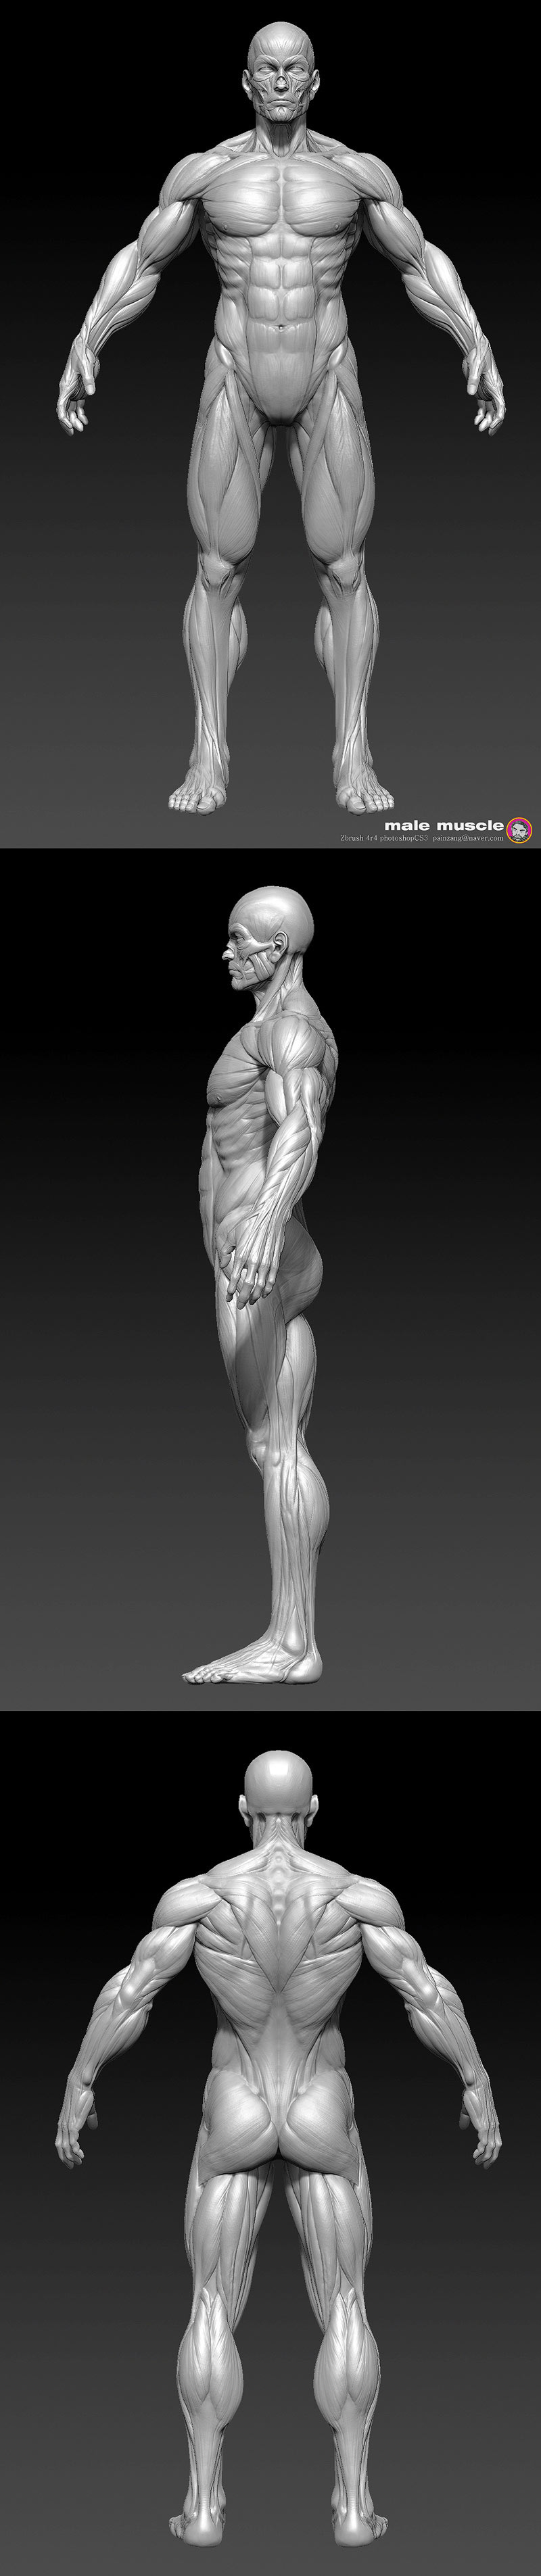 muscle_body_height_painzang11.jpg